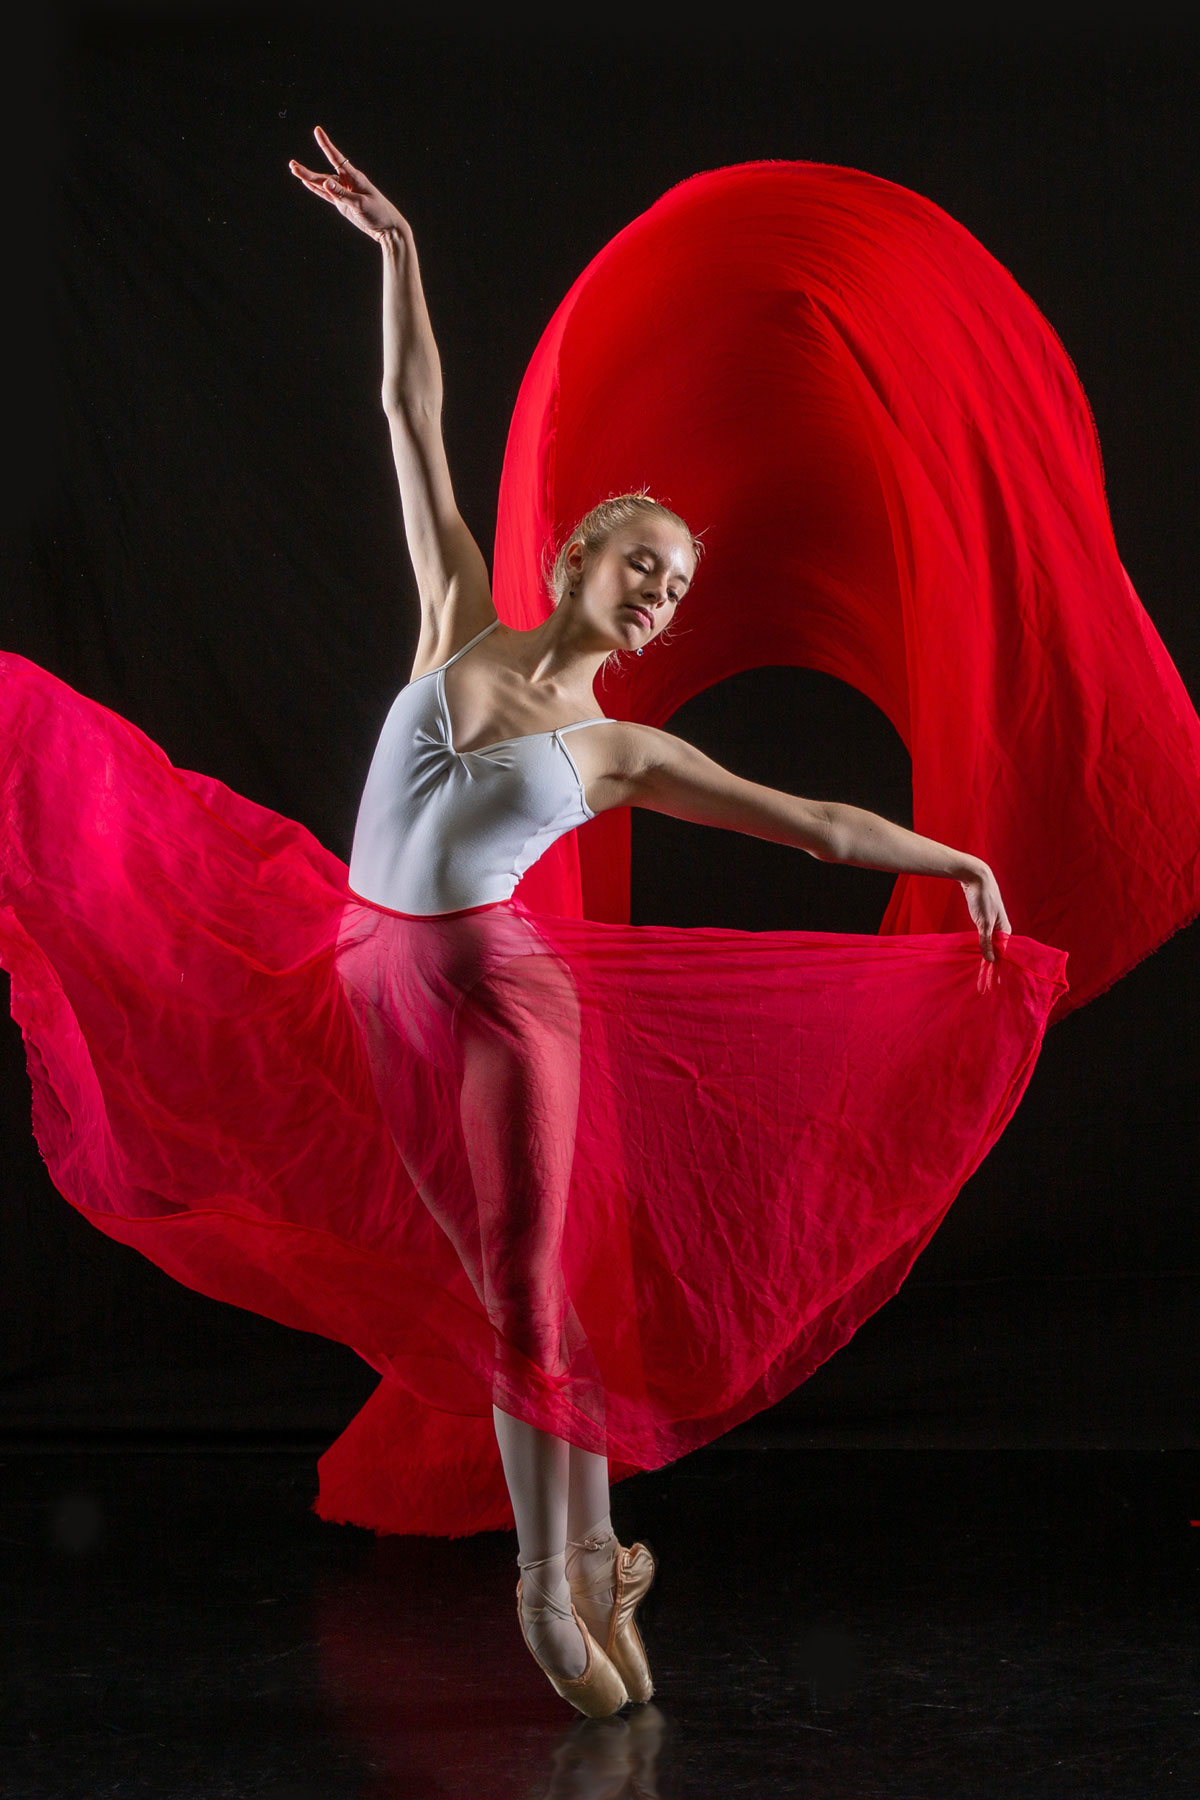 Ballet School of Vermont Student. Wayne Tarr Photography